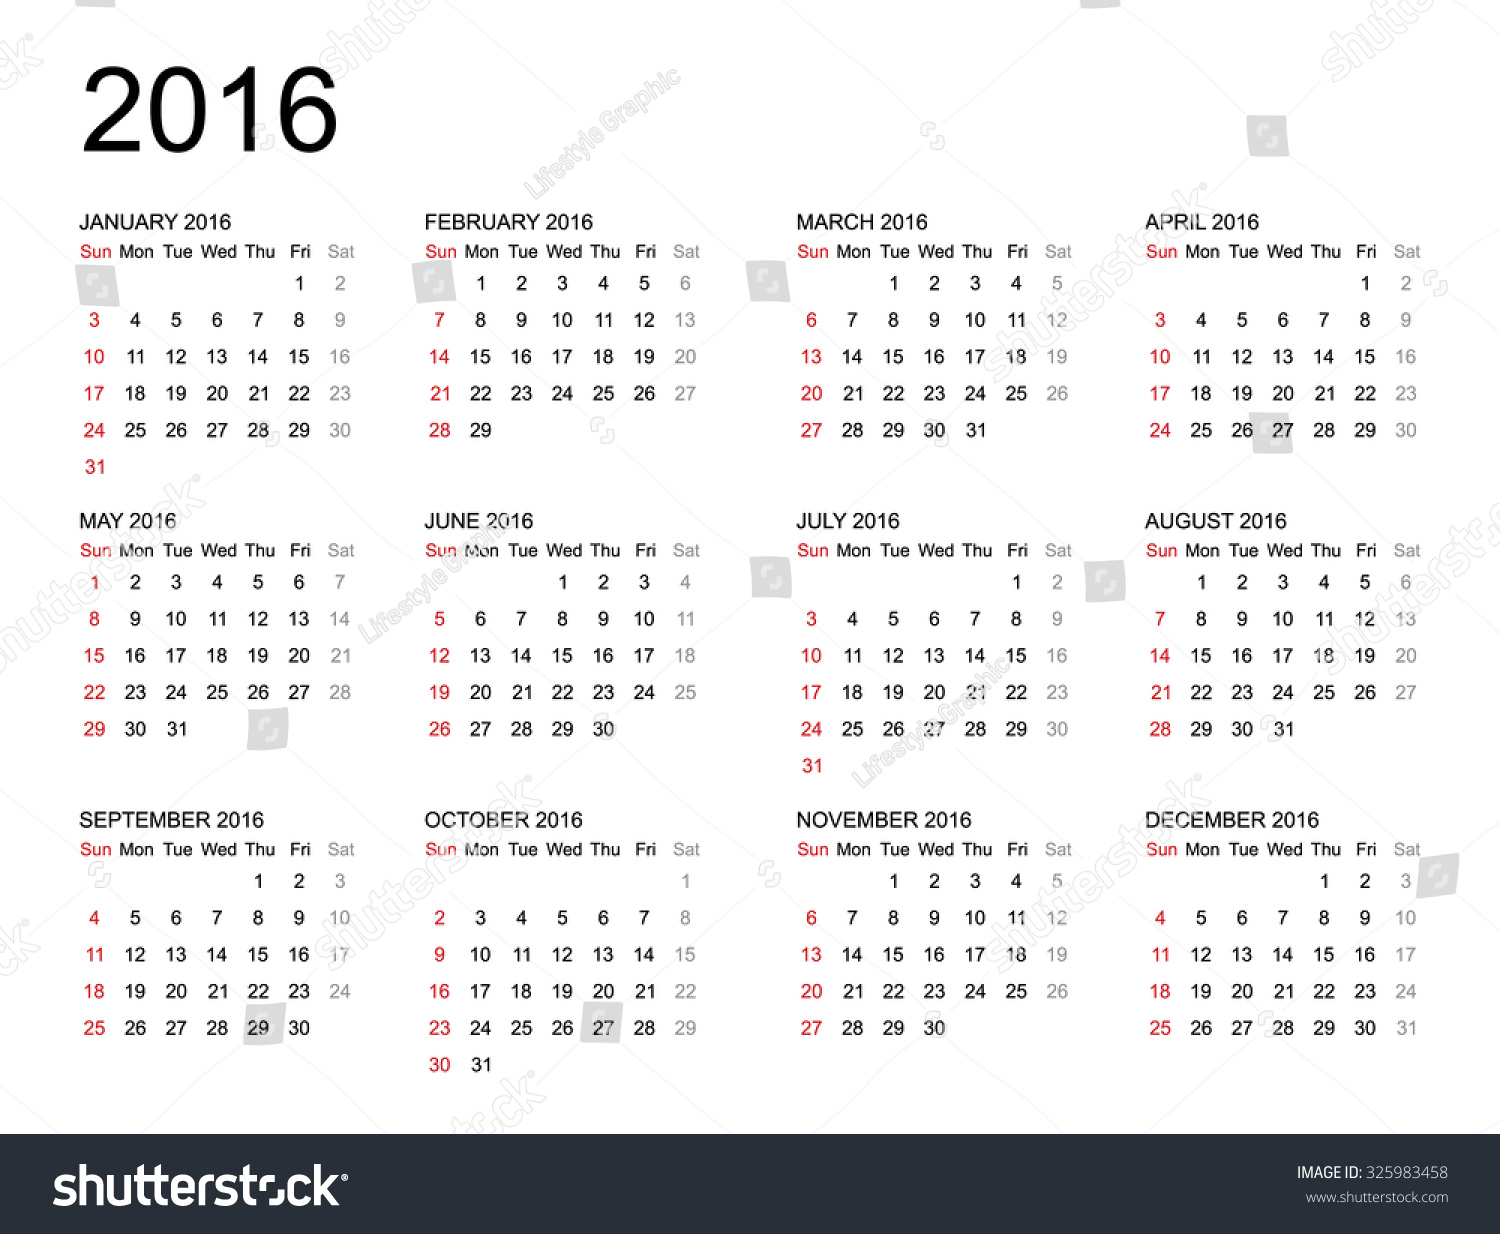 12,696 Calender 2016 Images, Stock Photos & Vectors | Shutterstock